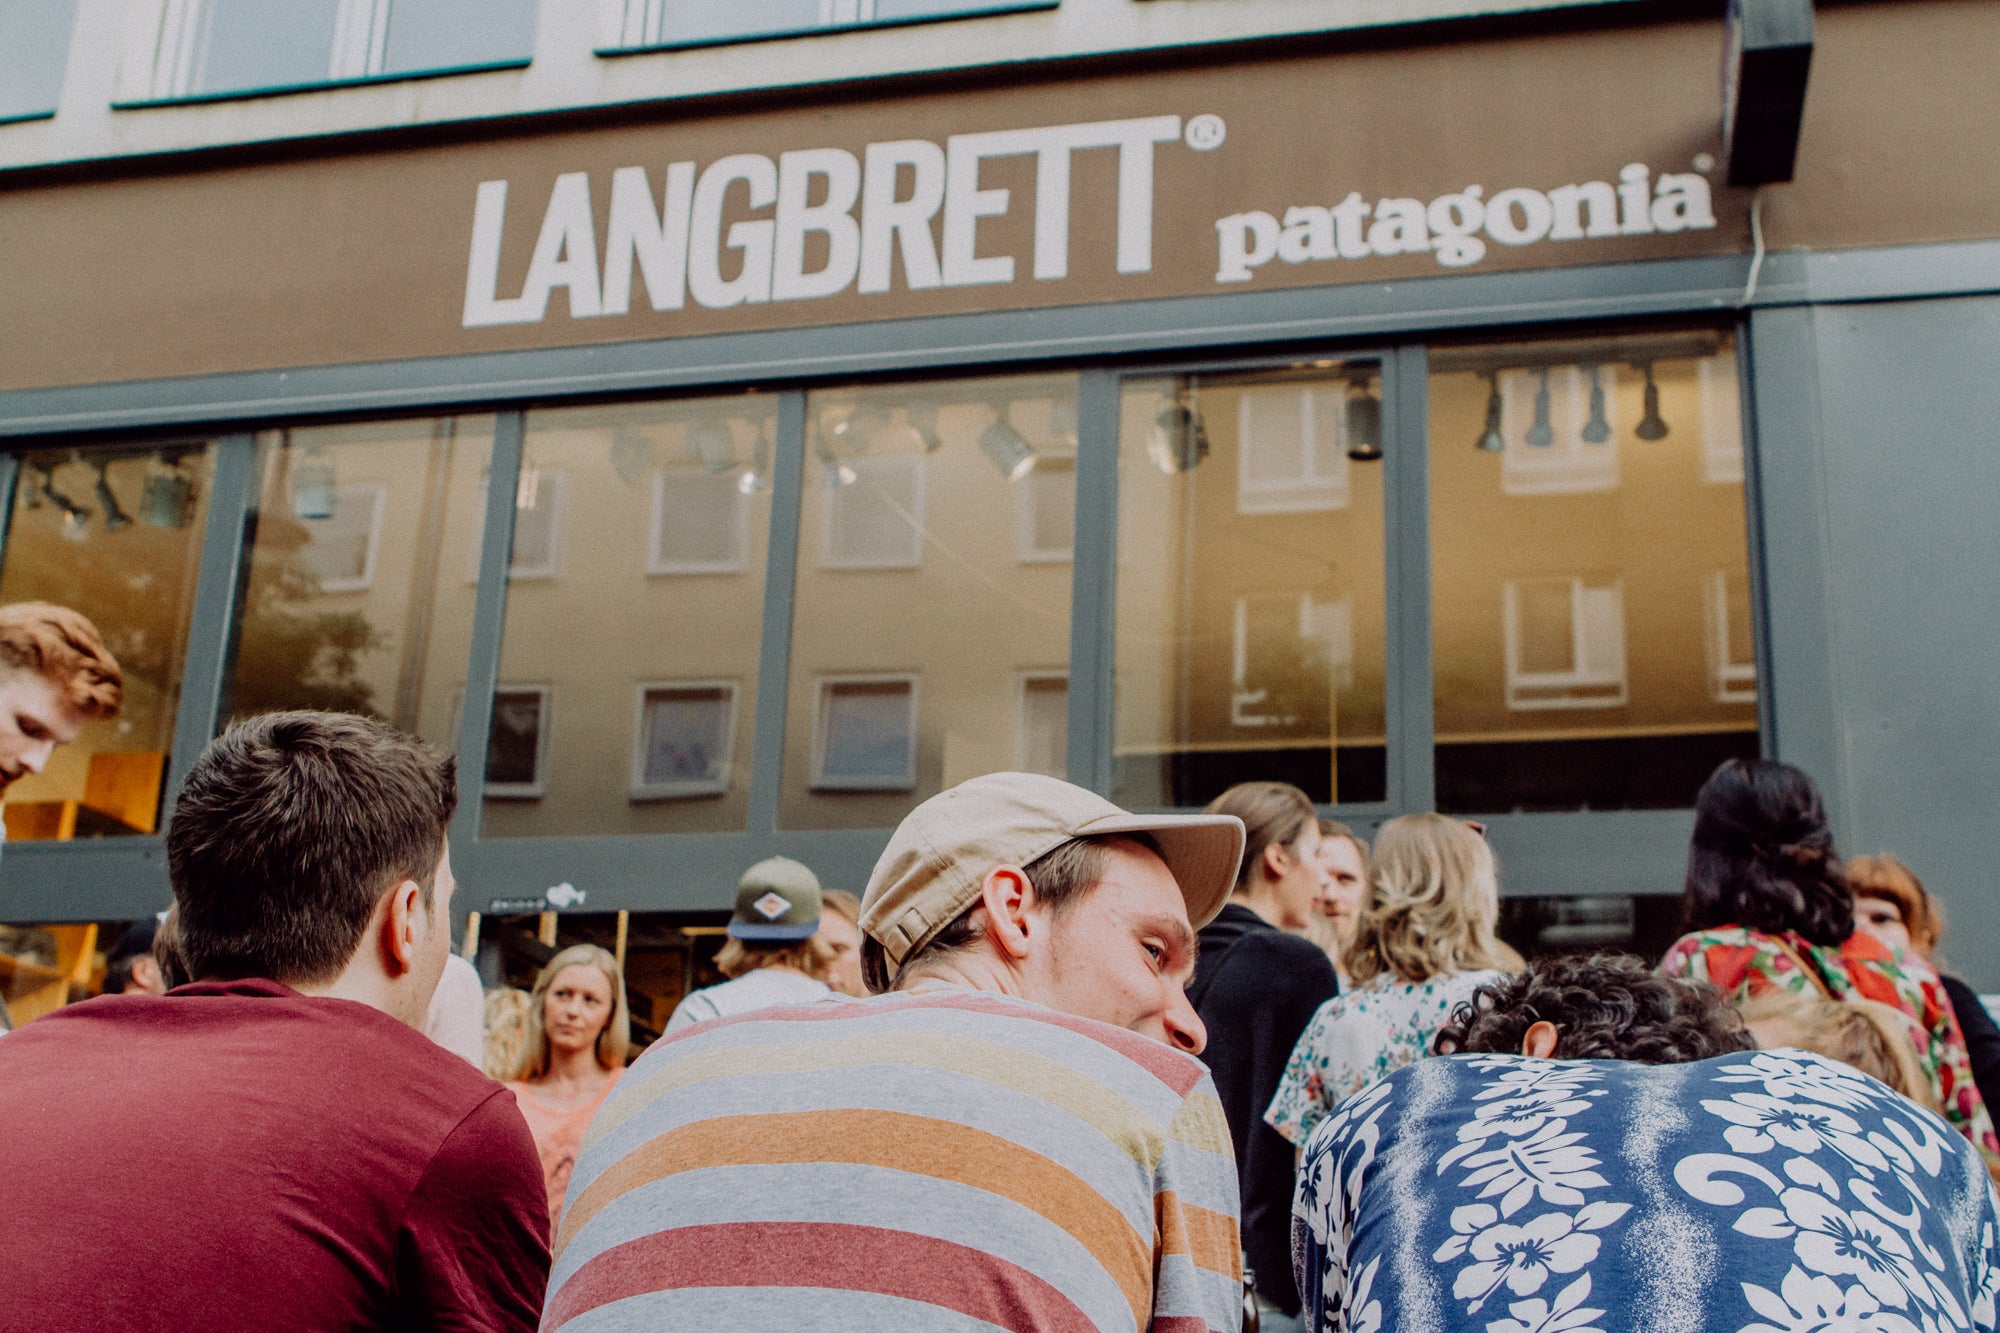 LANGBRETT Klub Veranstaltung im lokalen Store in Düsseldorf.